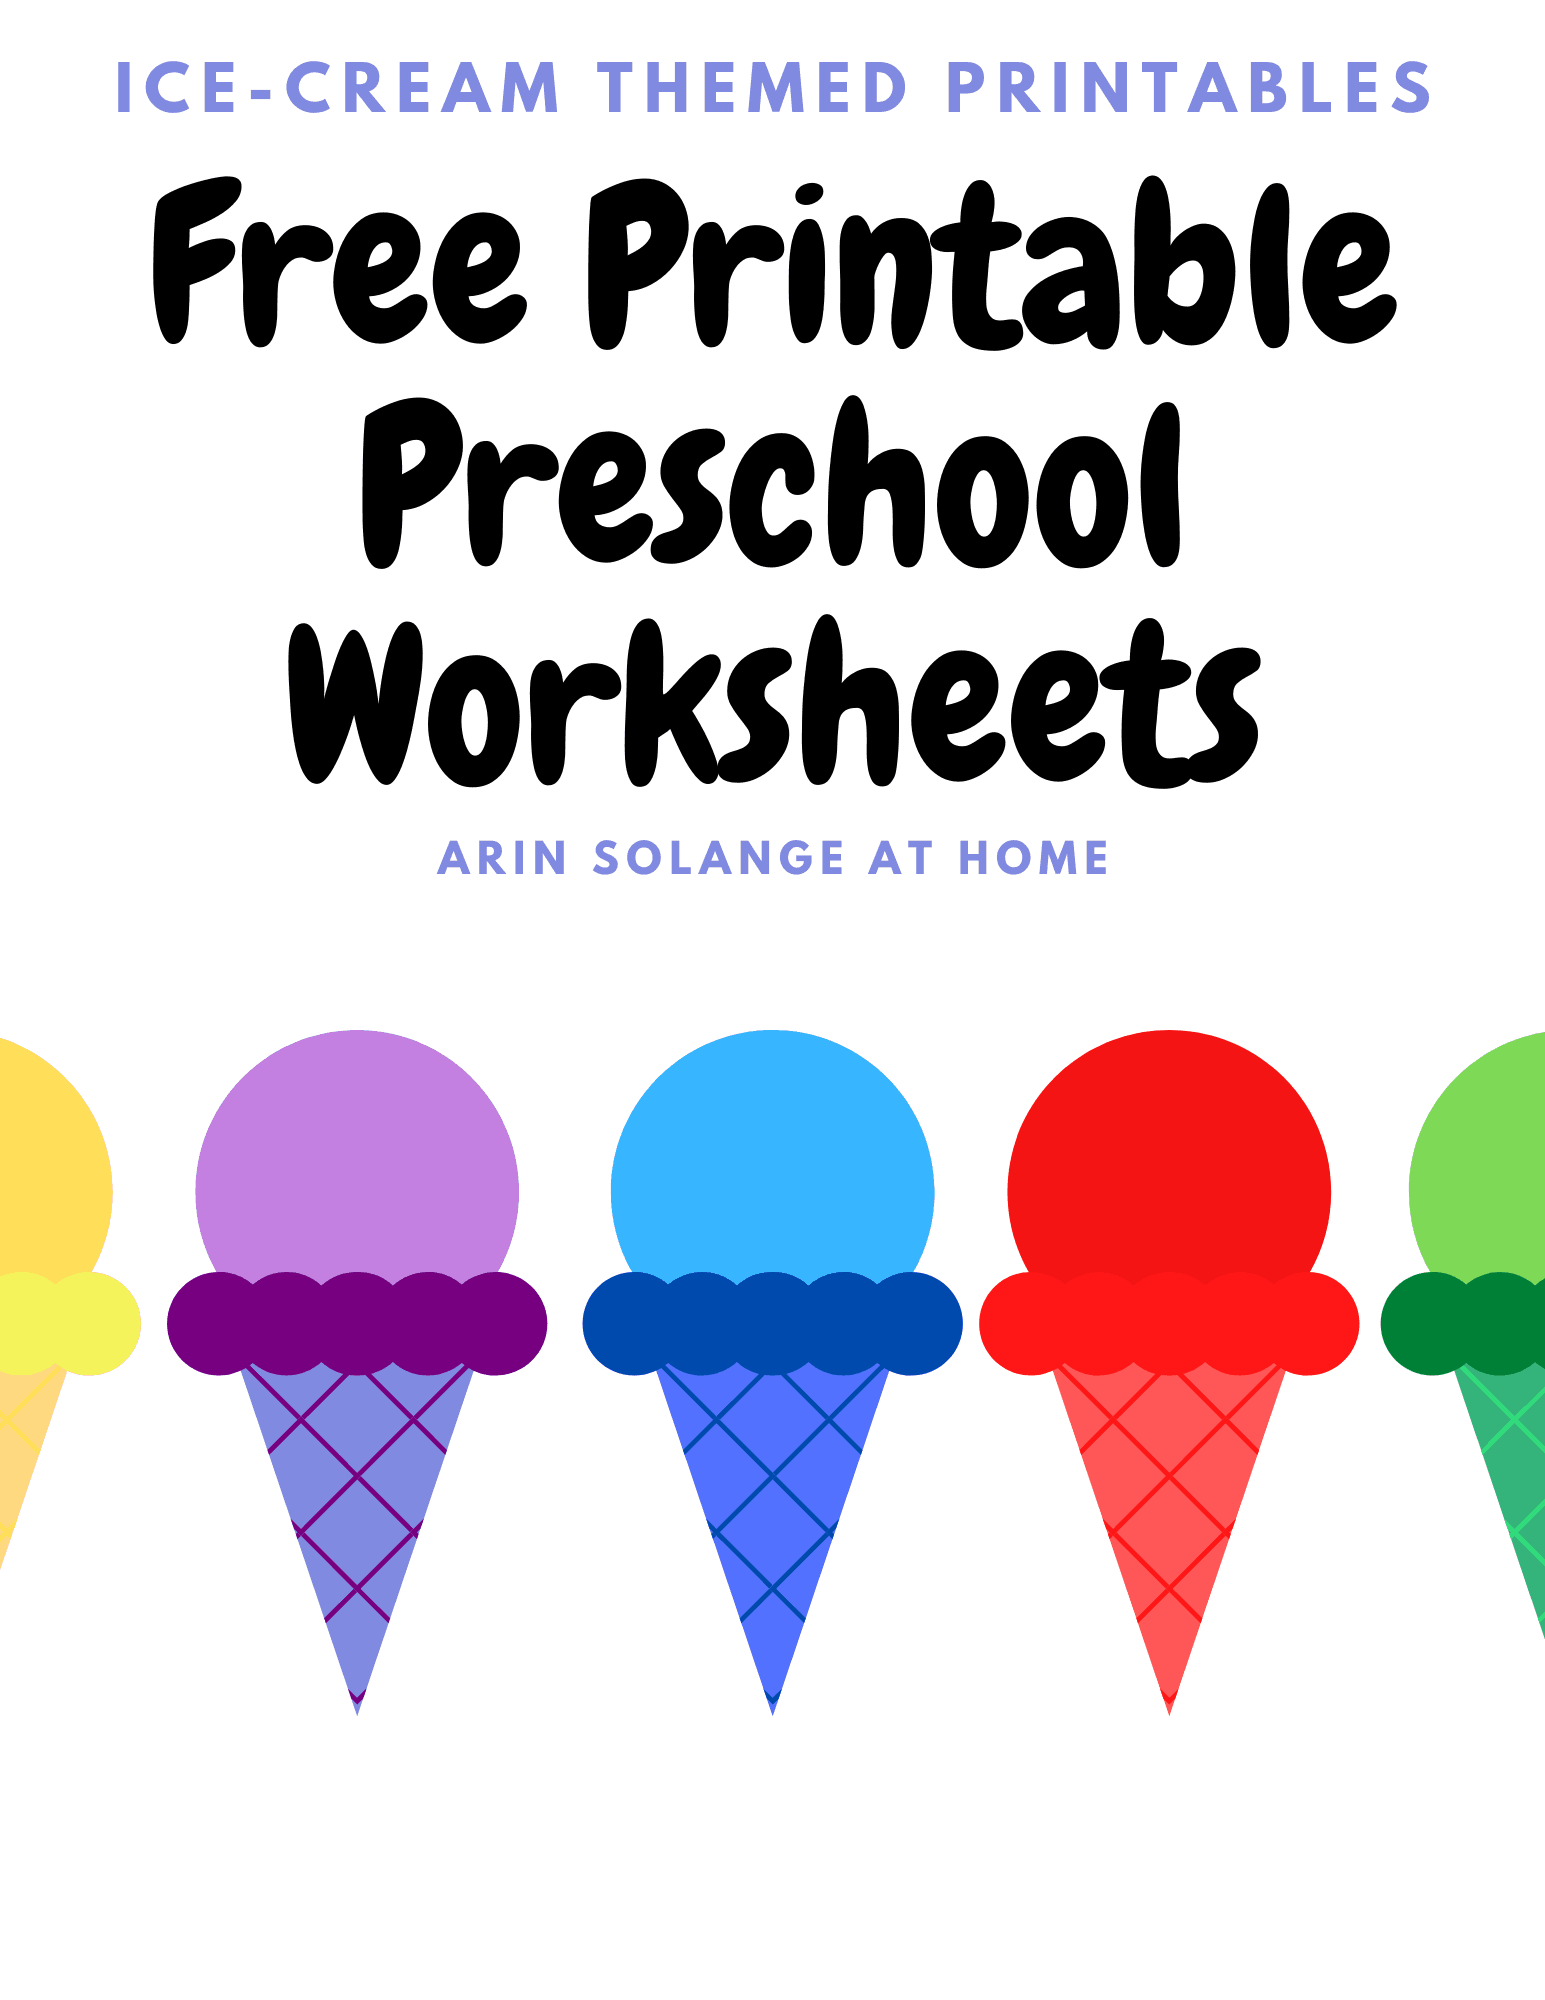 Free printable toddler worksheets